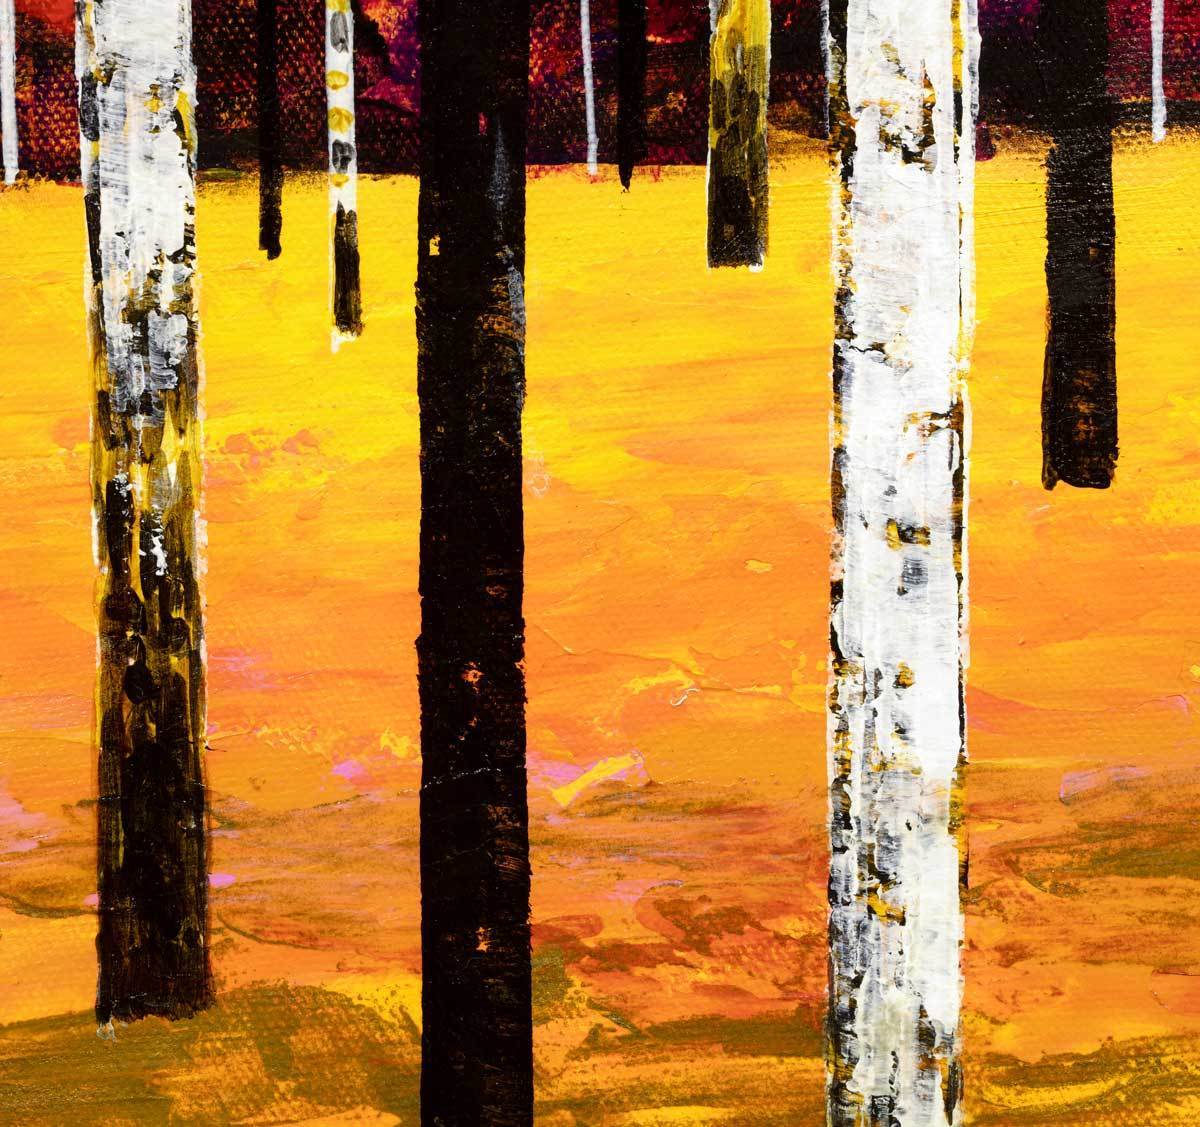 Into the Forest - Diptych Original Alex Jawdokimov Framed